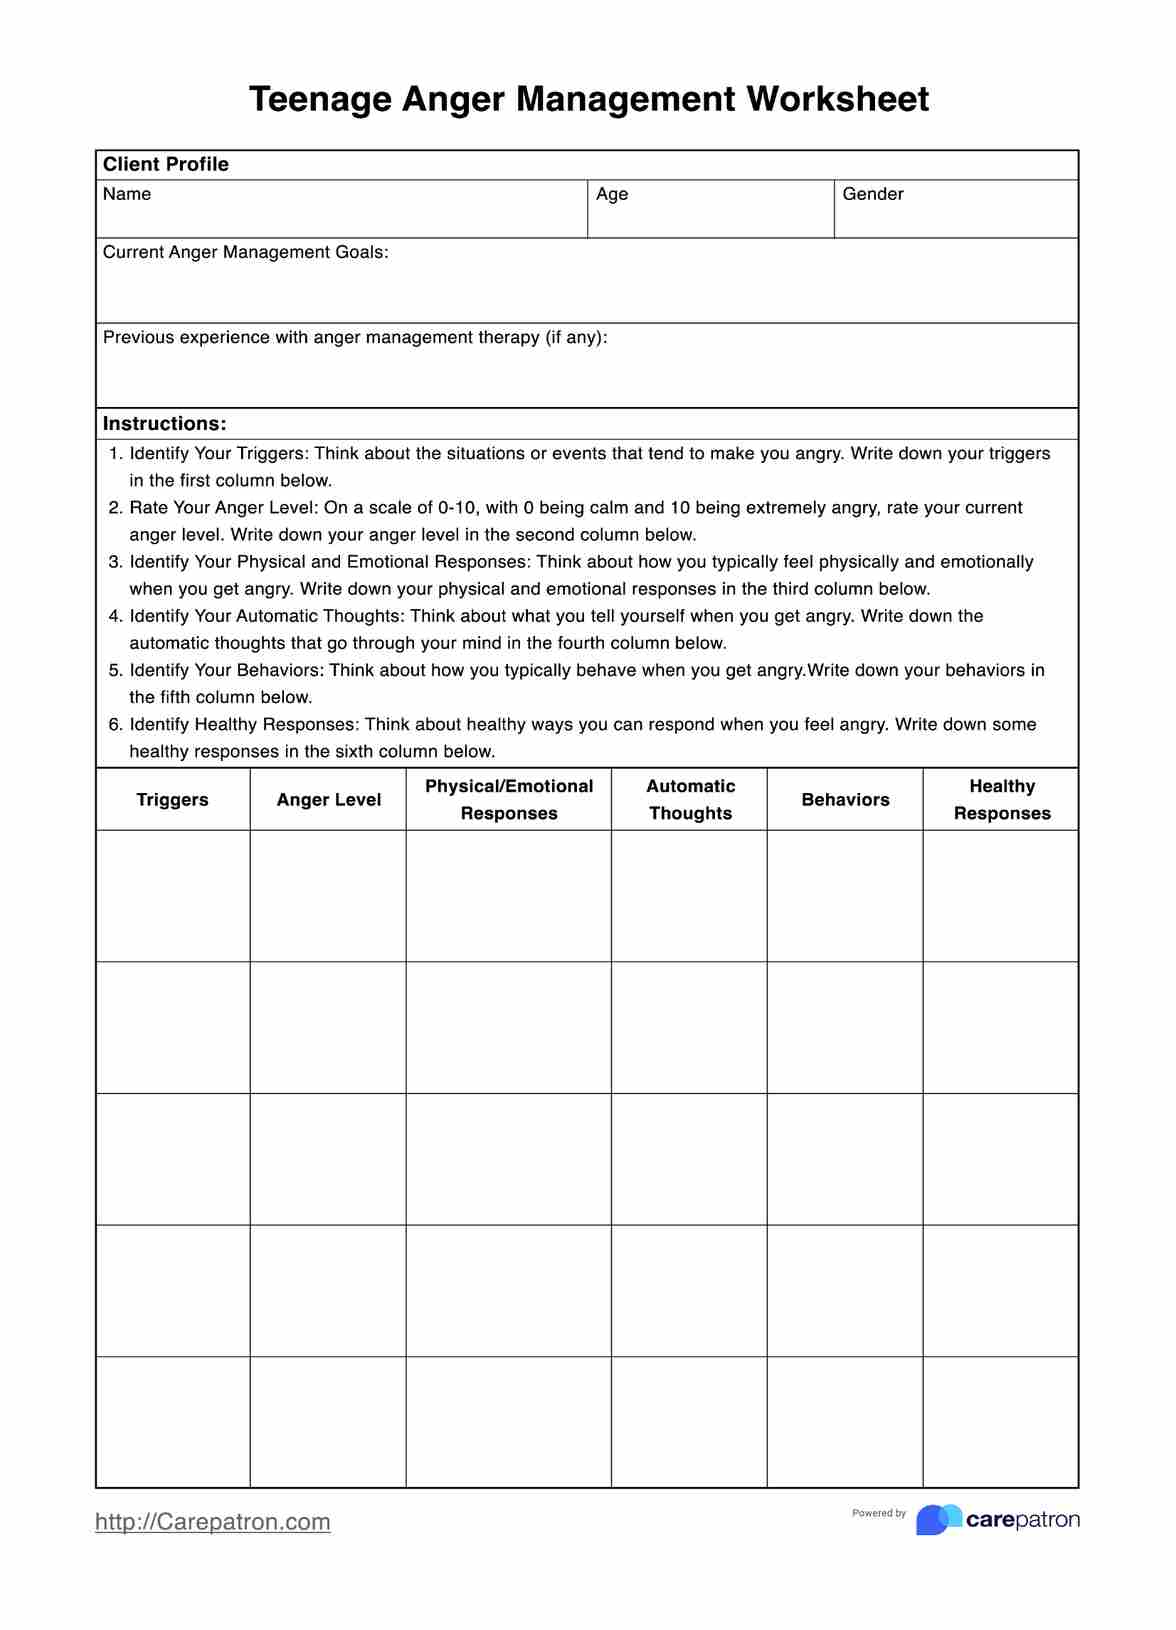 Teenage Anger Management Worksheets PDF Example